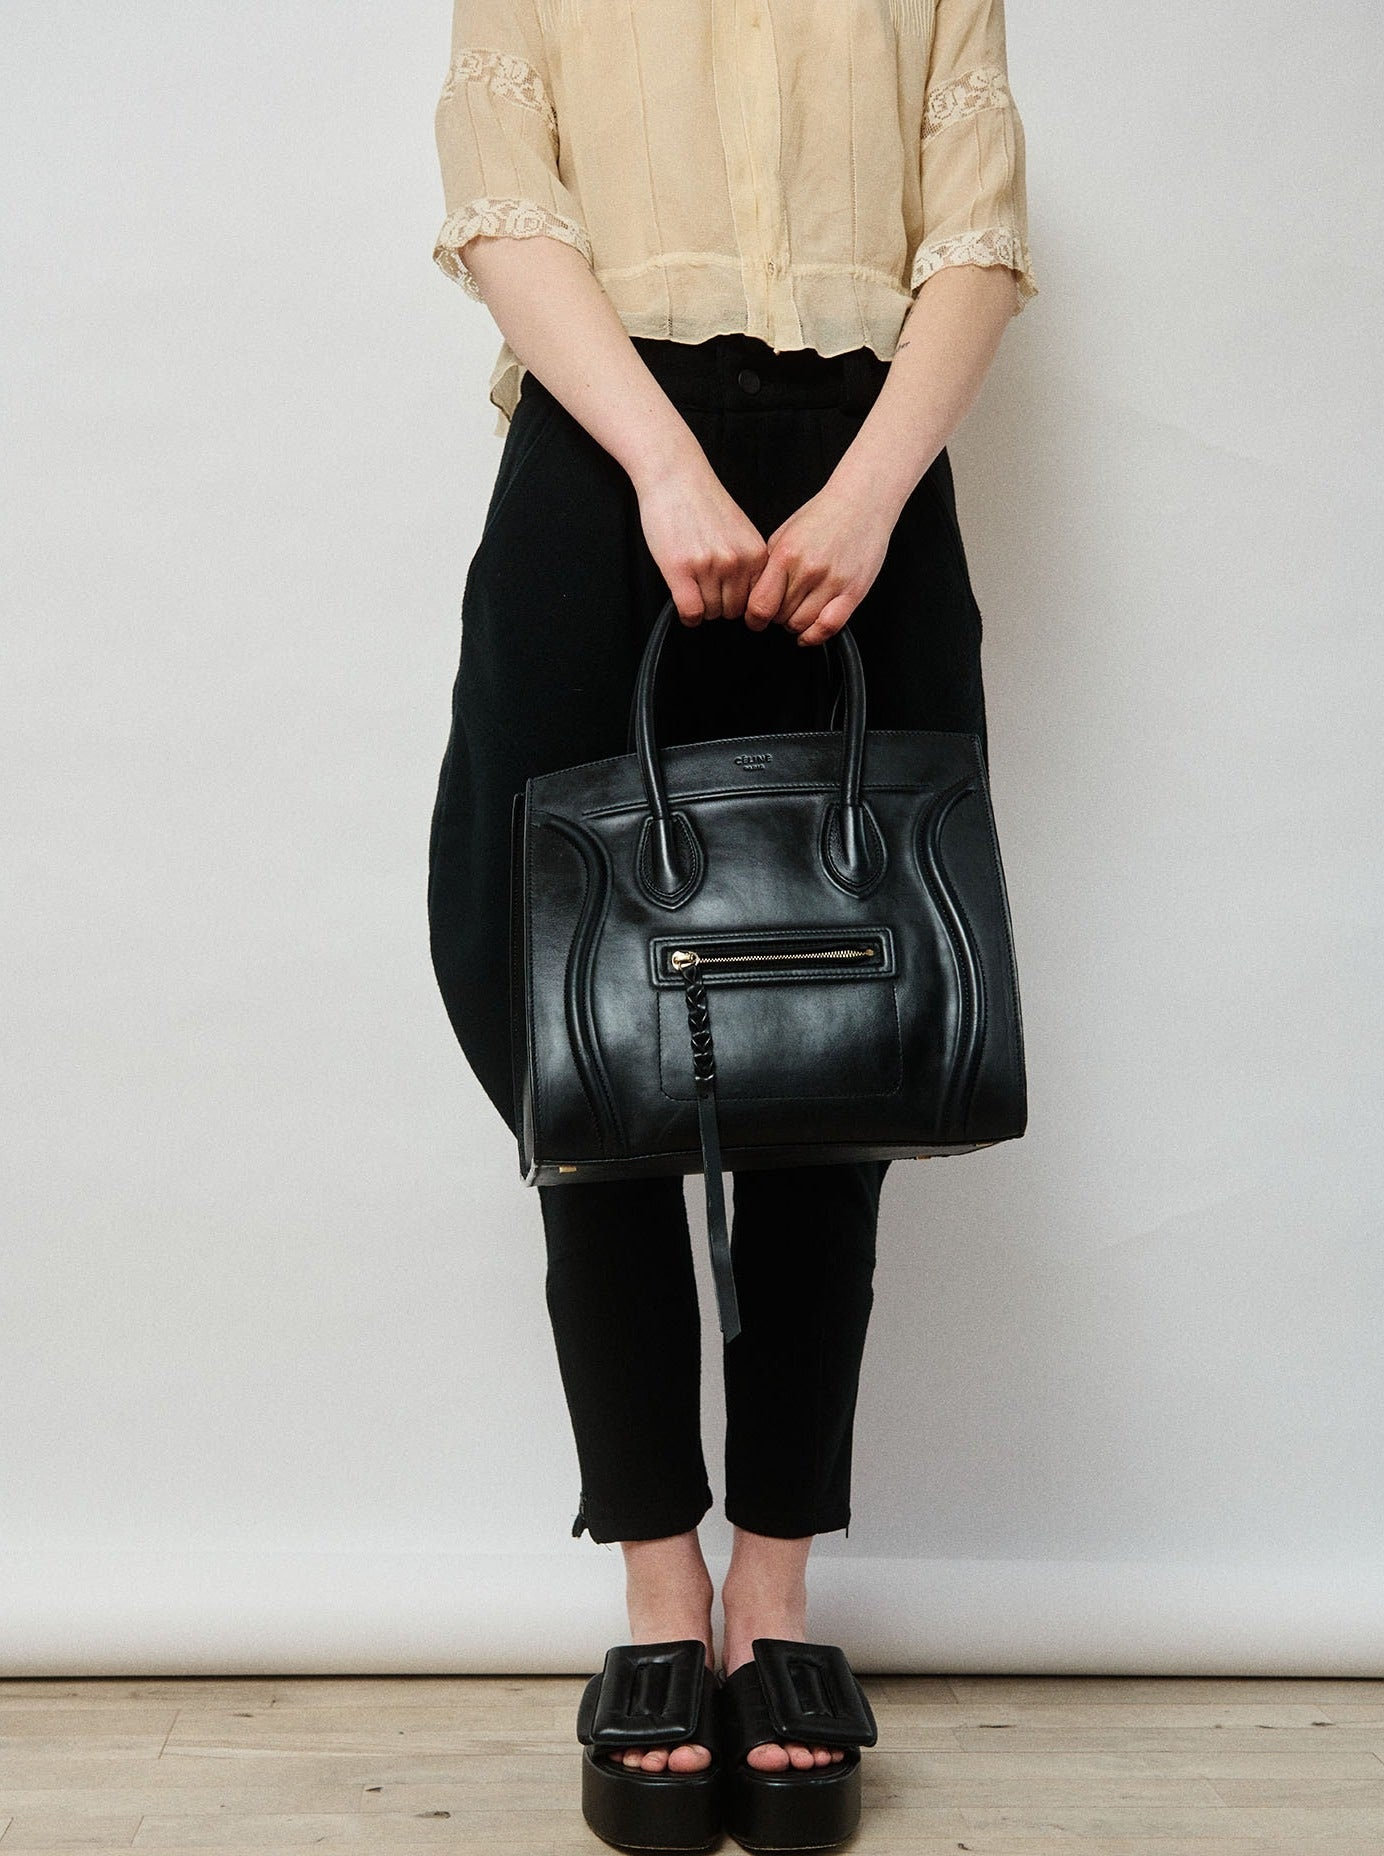 Celine Nano Luggage Bag  Unboxing & try-on! 